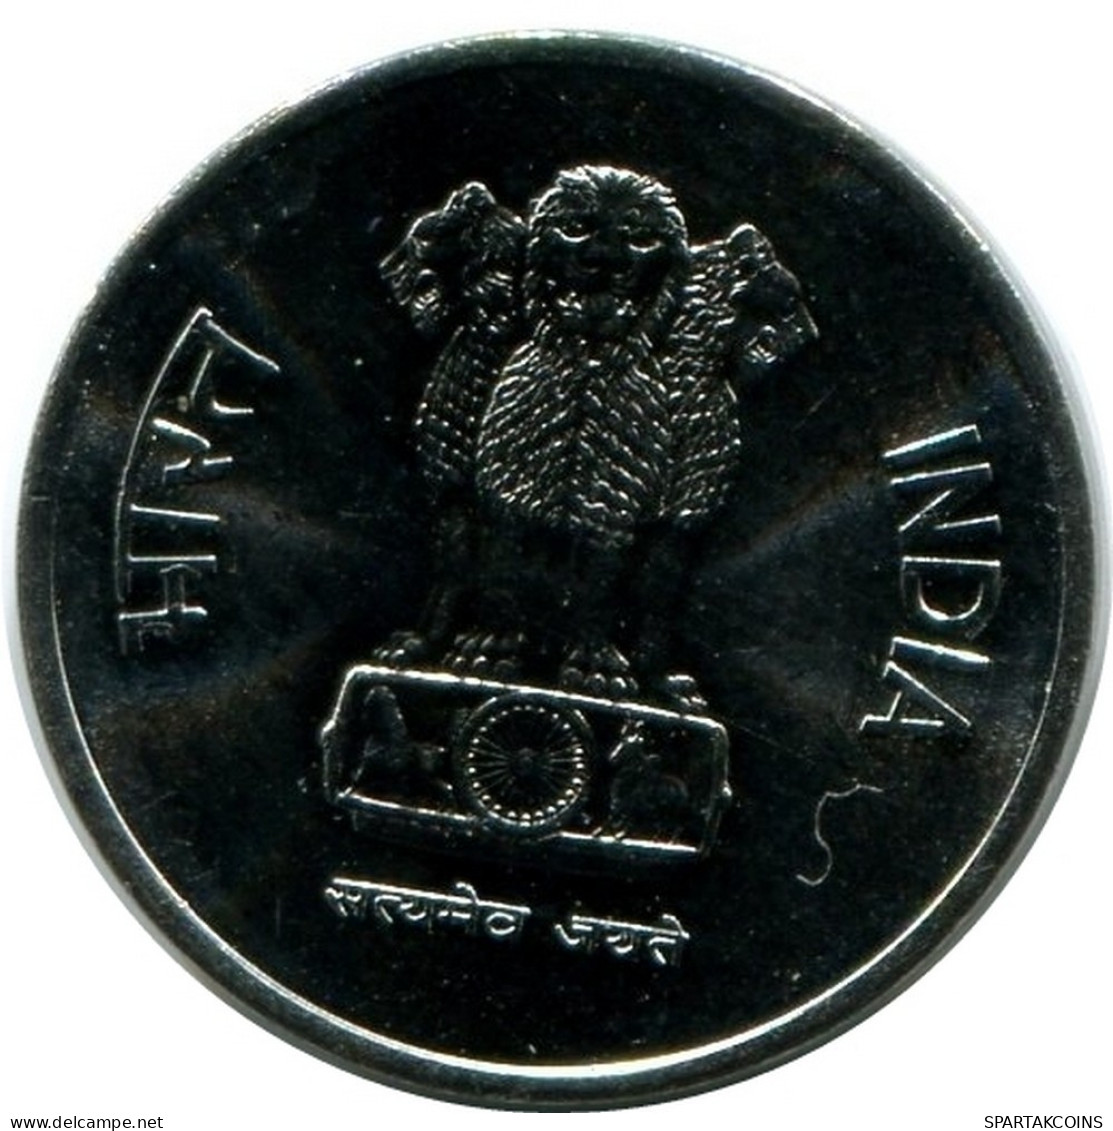 10 PAISE 1988 INDIA UNC Coin #M10111.U.A - India